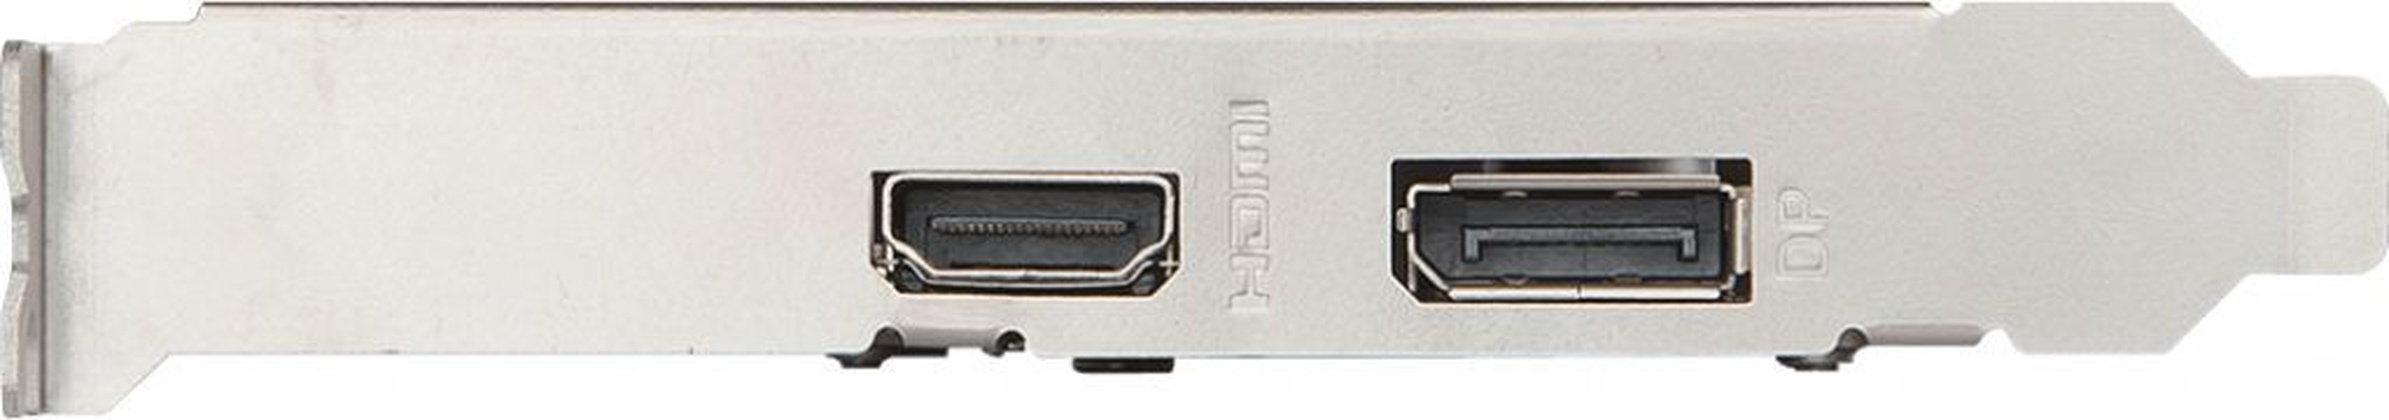 Видеокарта GT 1030 MSI (GT 1030 2GD4 LP OC)